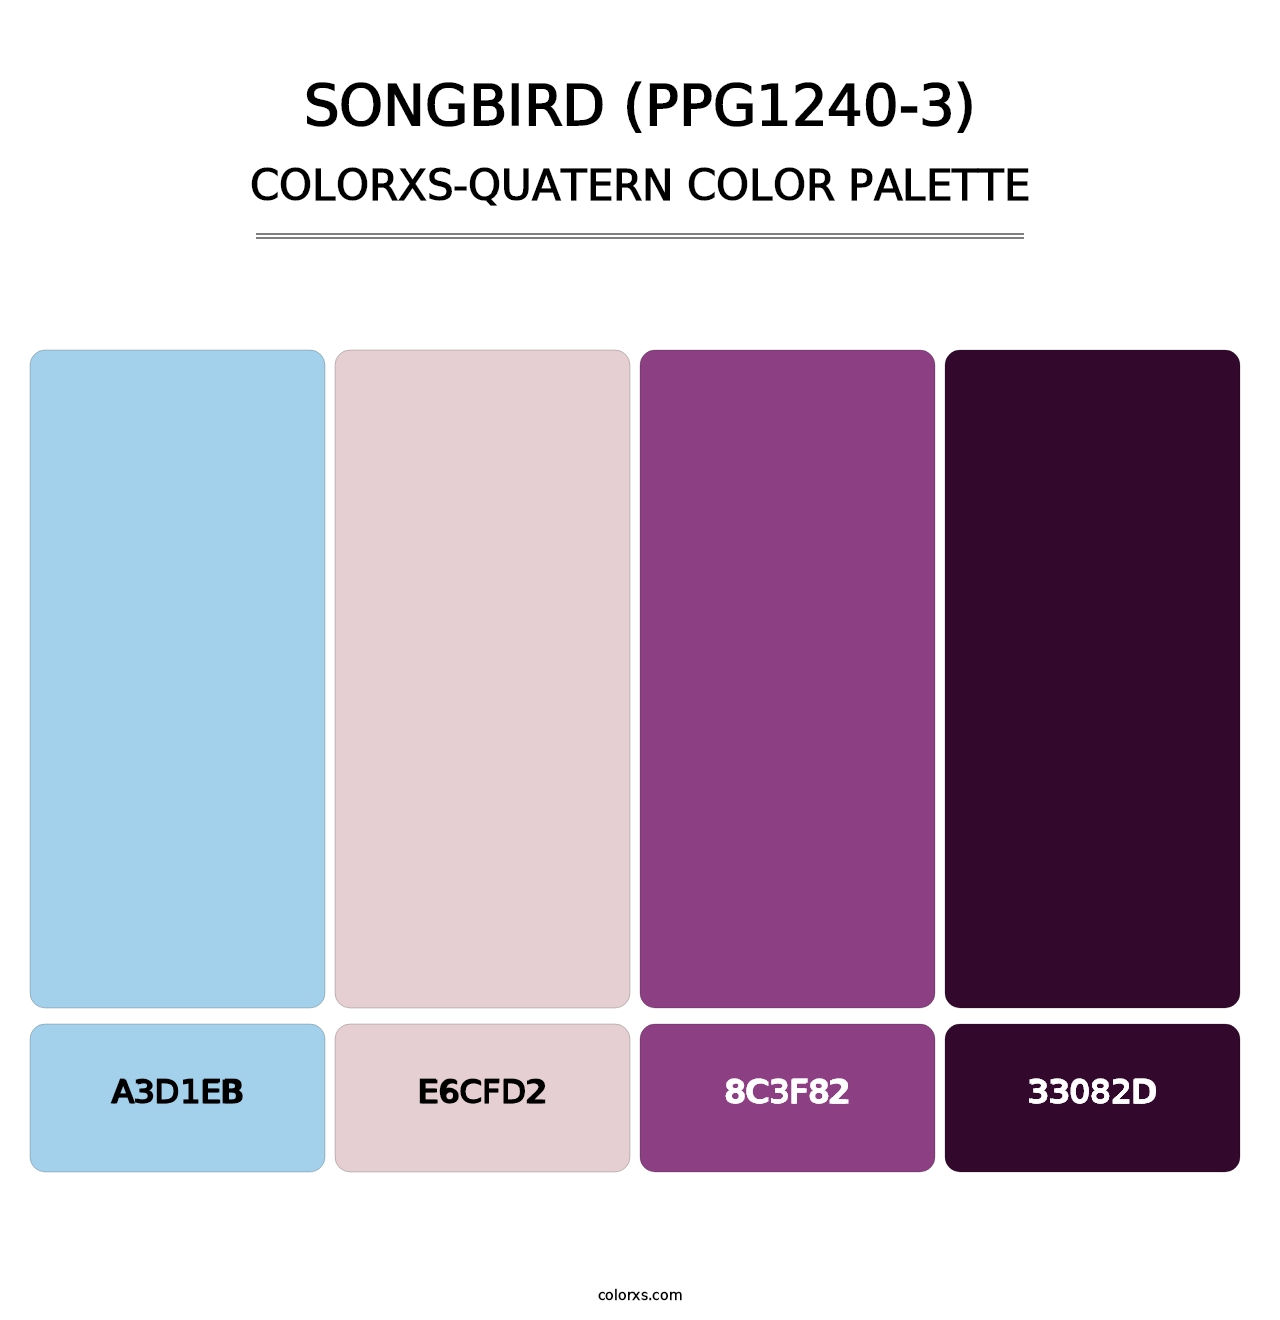 Songbird (PPG1240-3) - Colorxs Quatern Palette